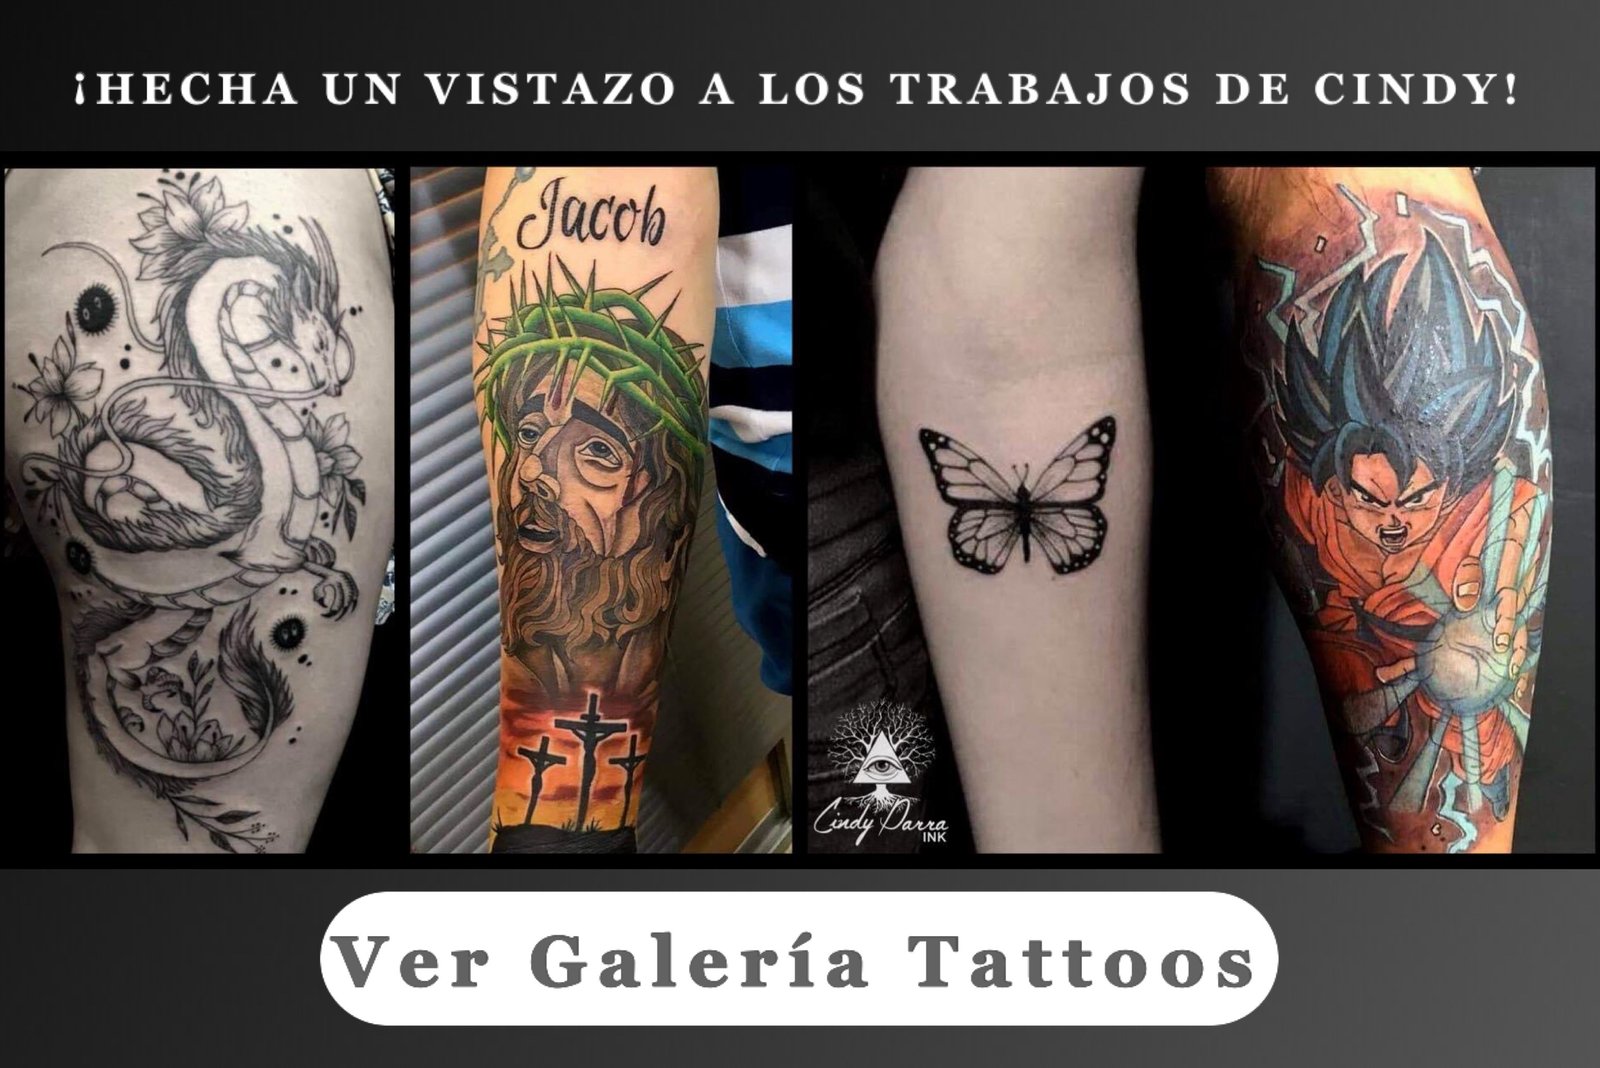 Tattoos x Cindy Parra Ink